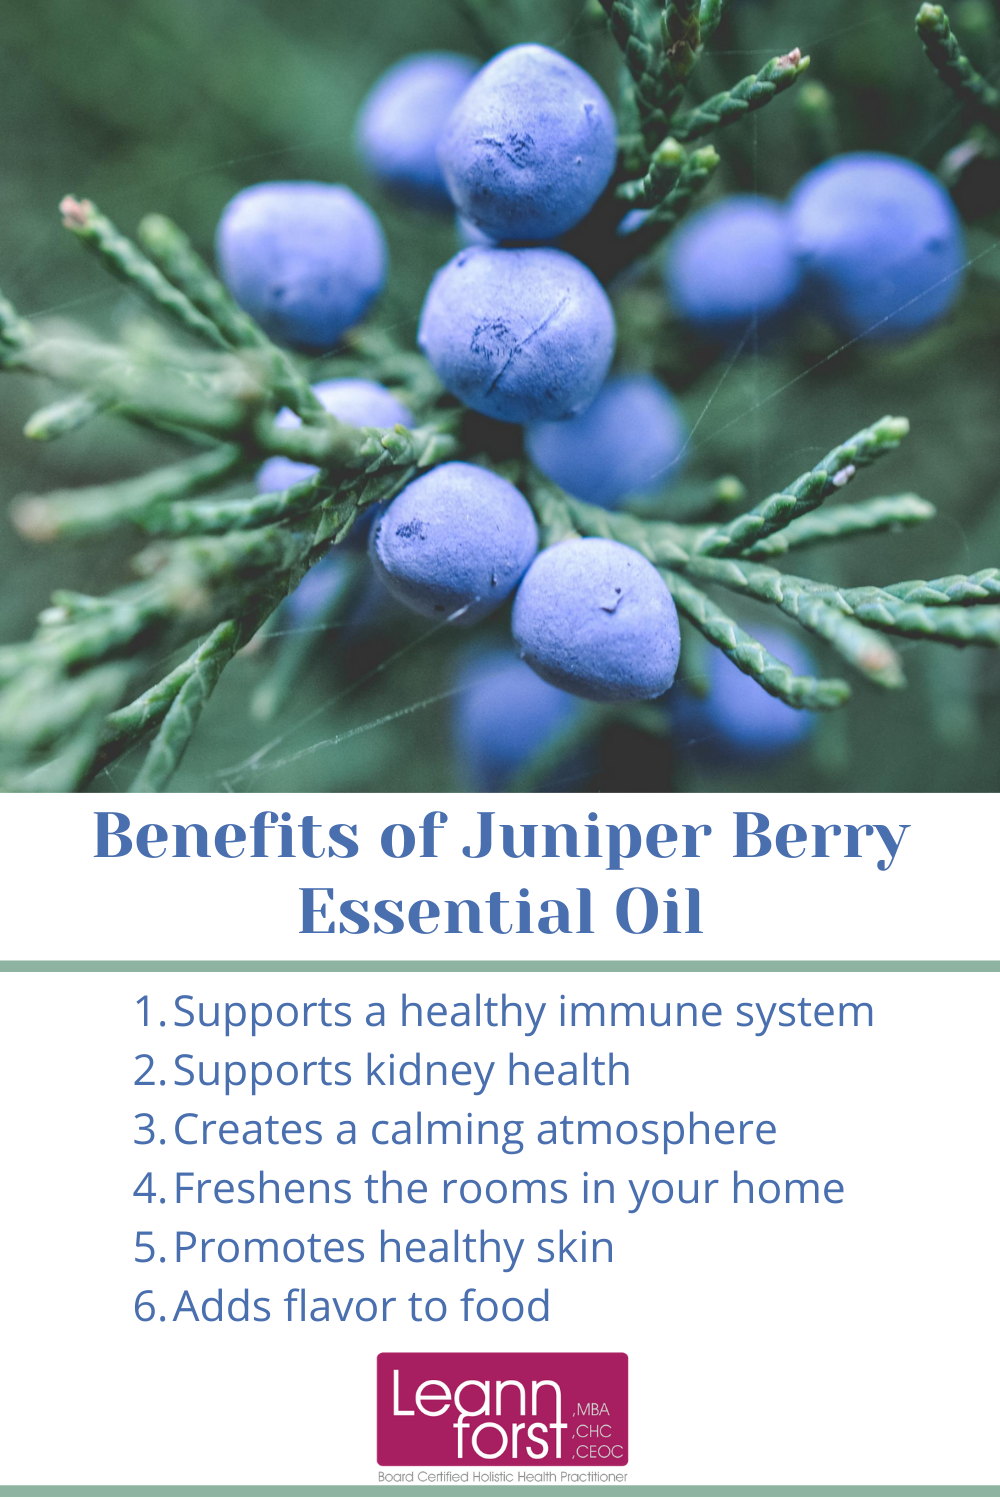 Benefits of Juniper Berry Essential Oil | LeannForst.com